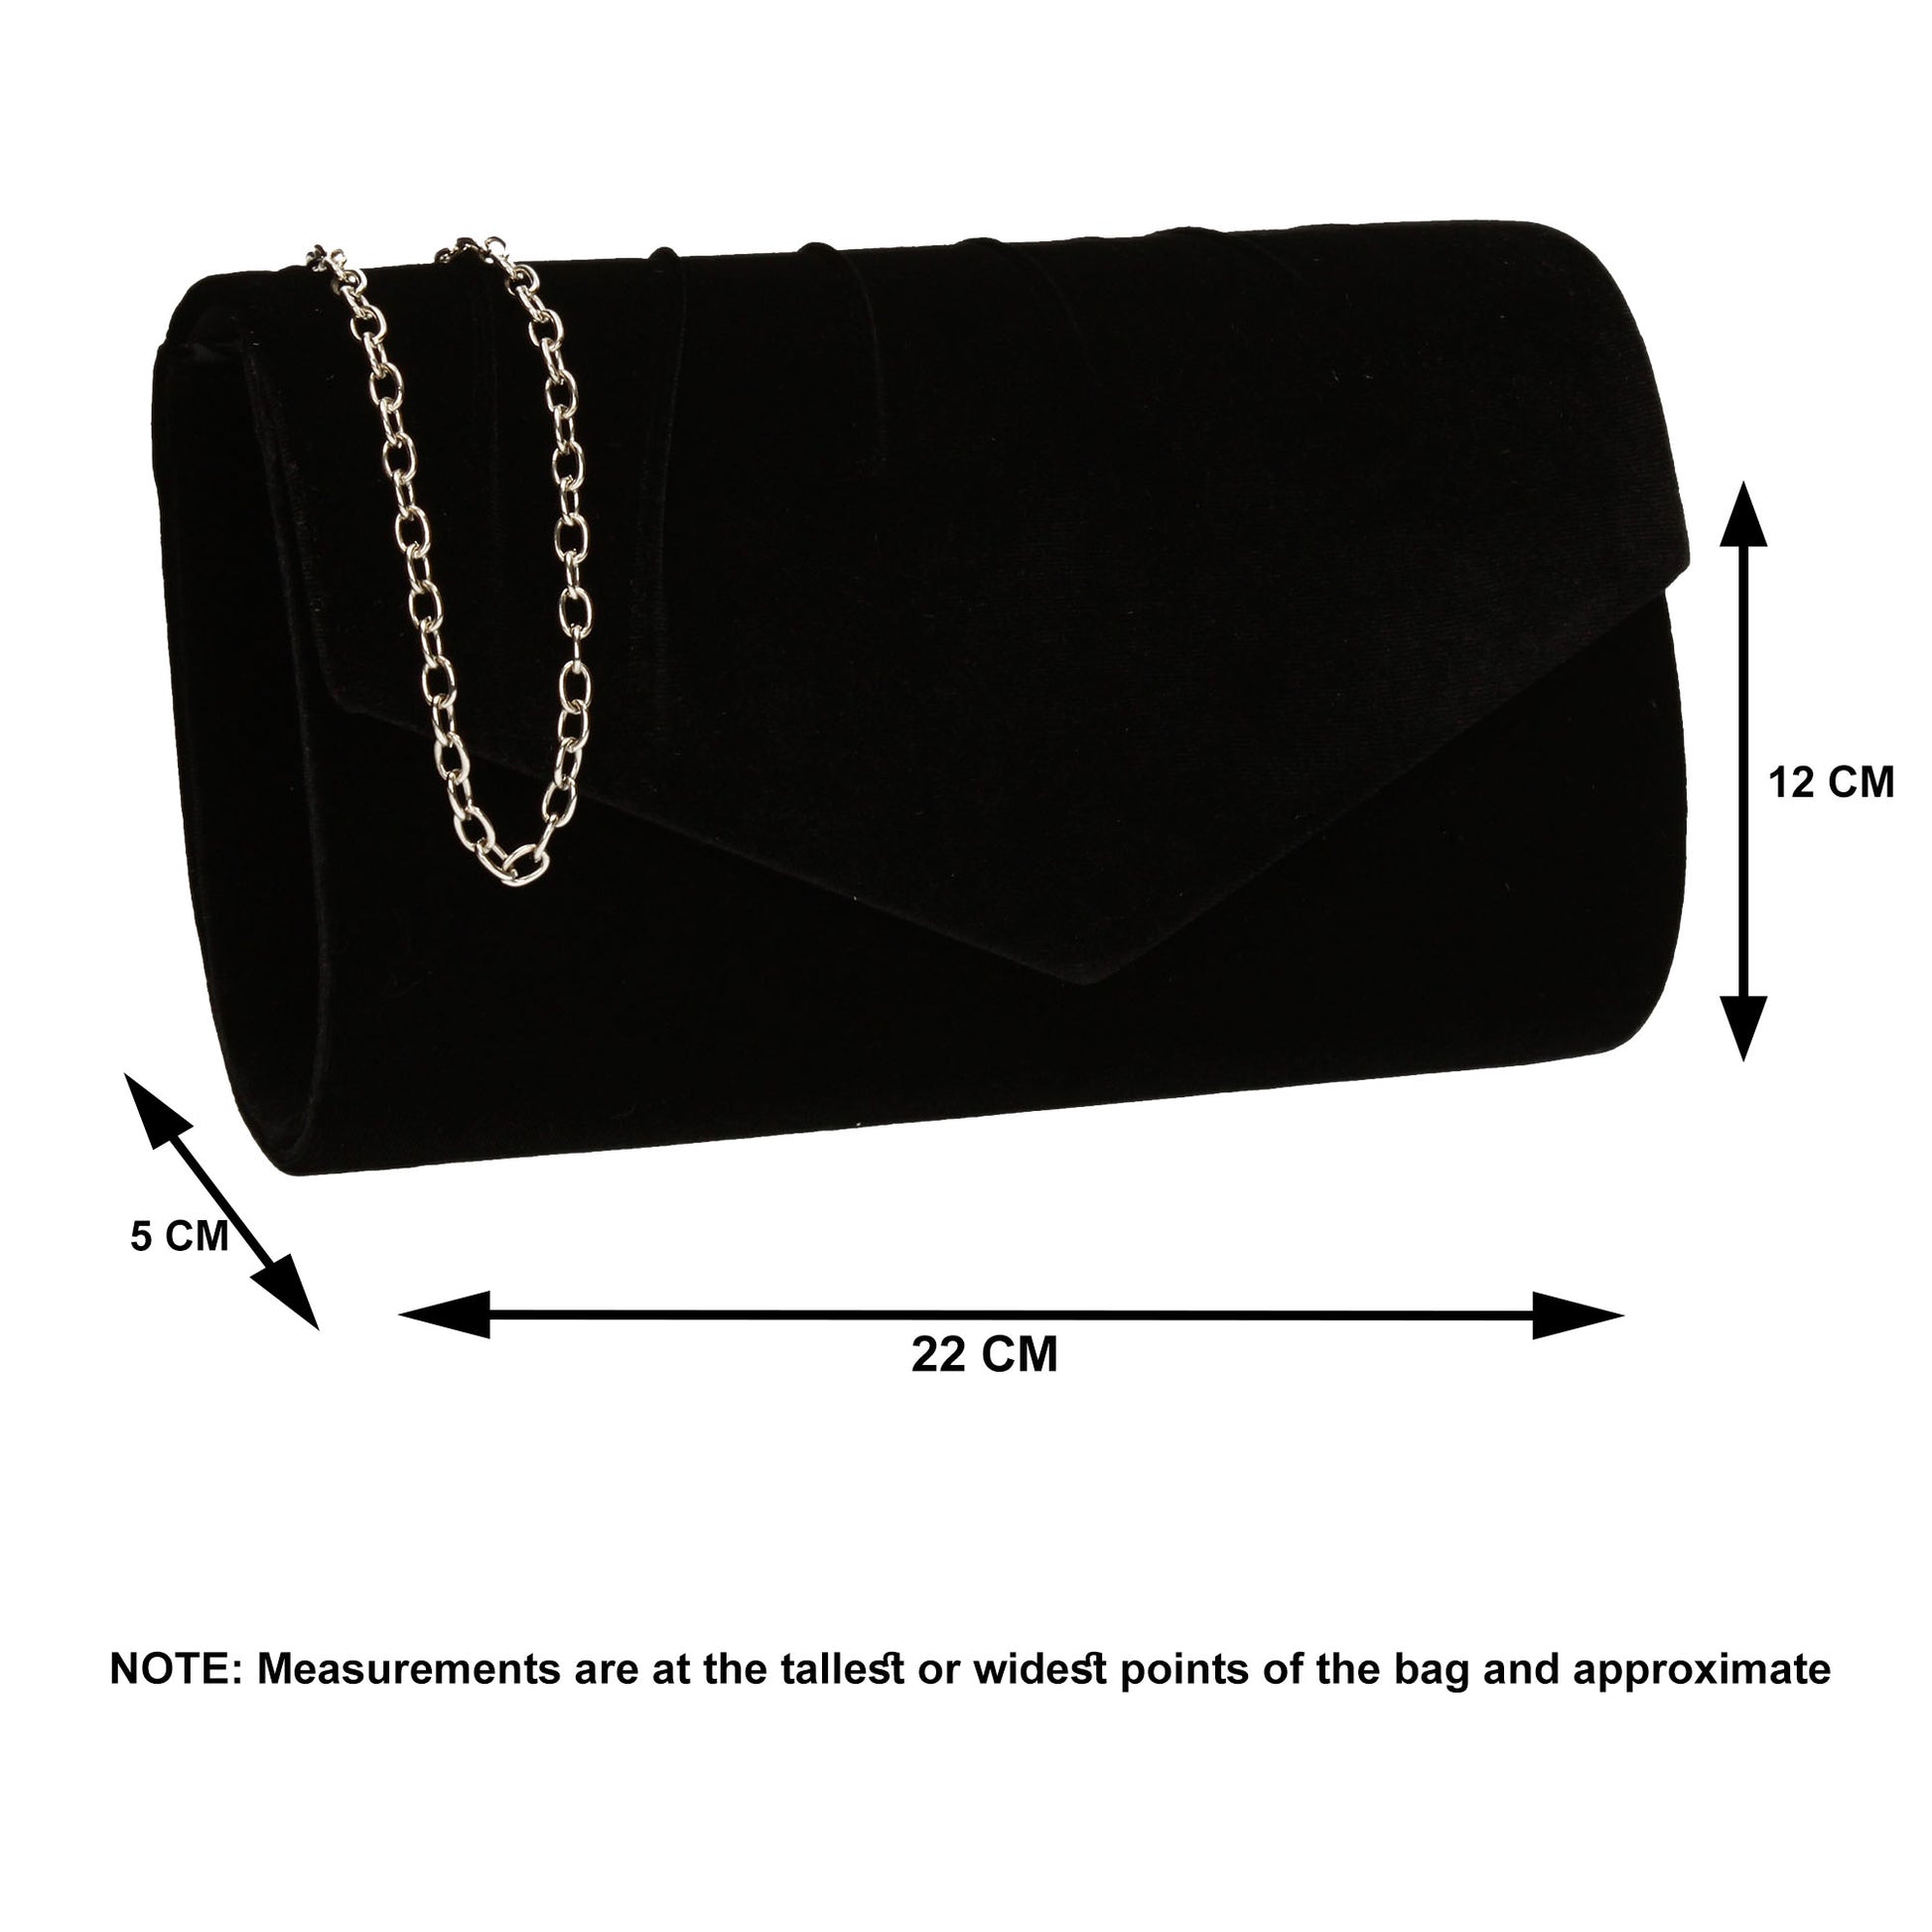 SWANKYSWANS Jess Clutch Bag Black Cute Cheap Clutch Bag For Weddings School and Work